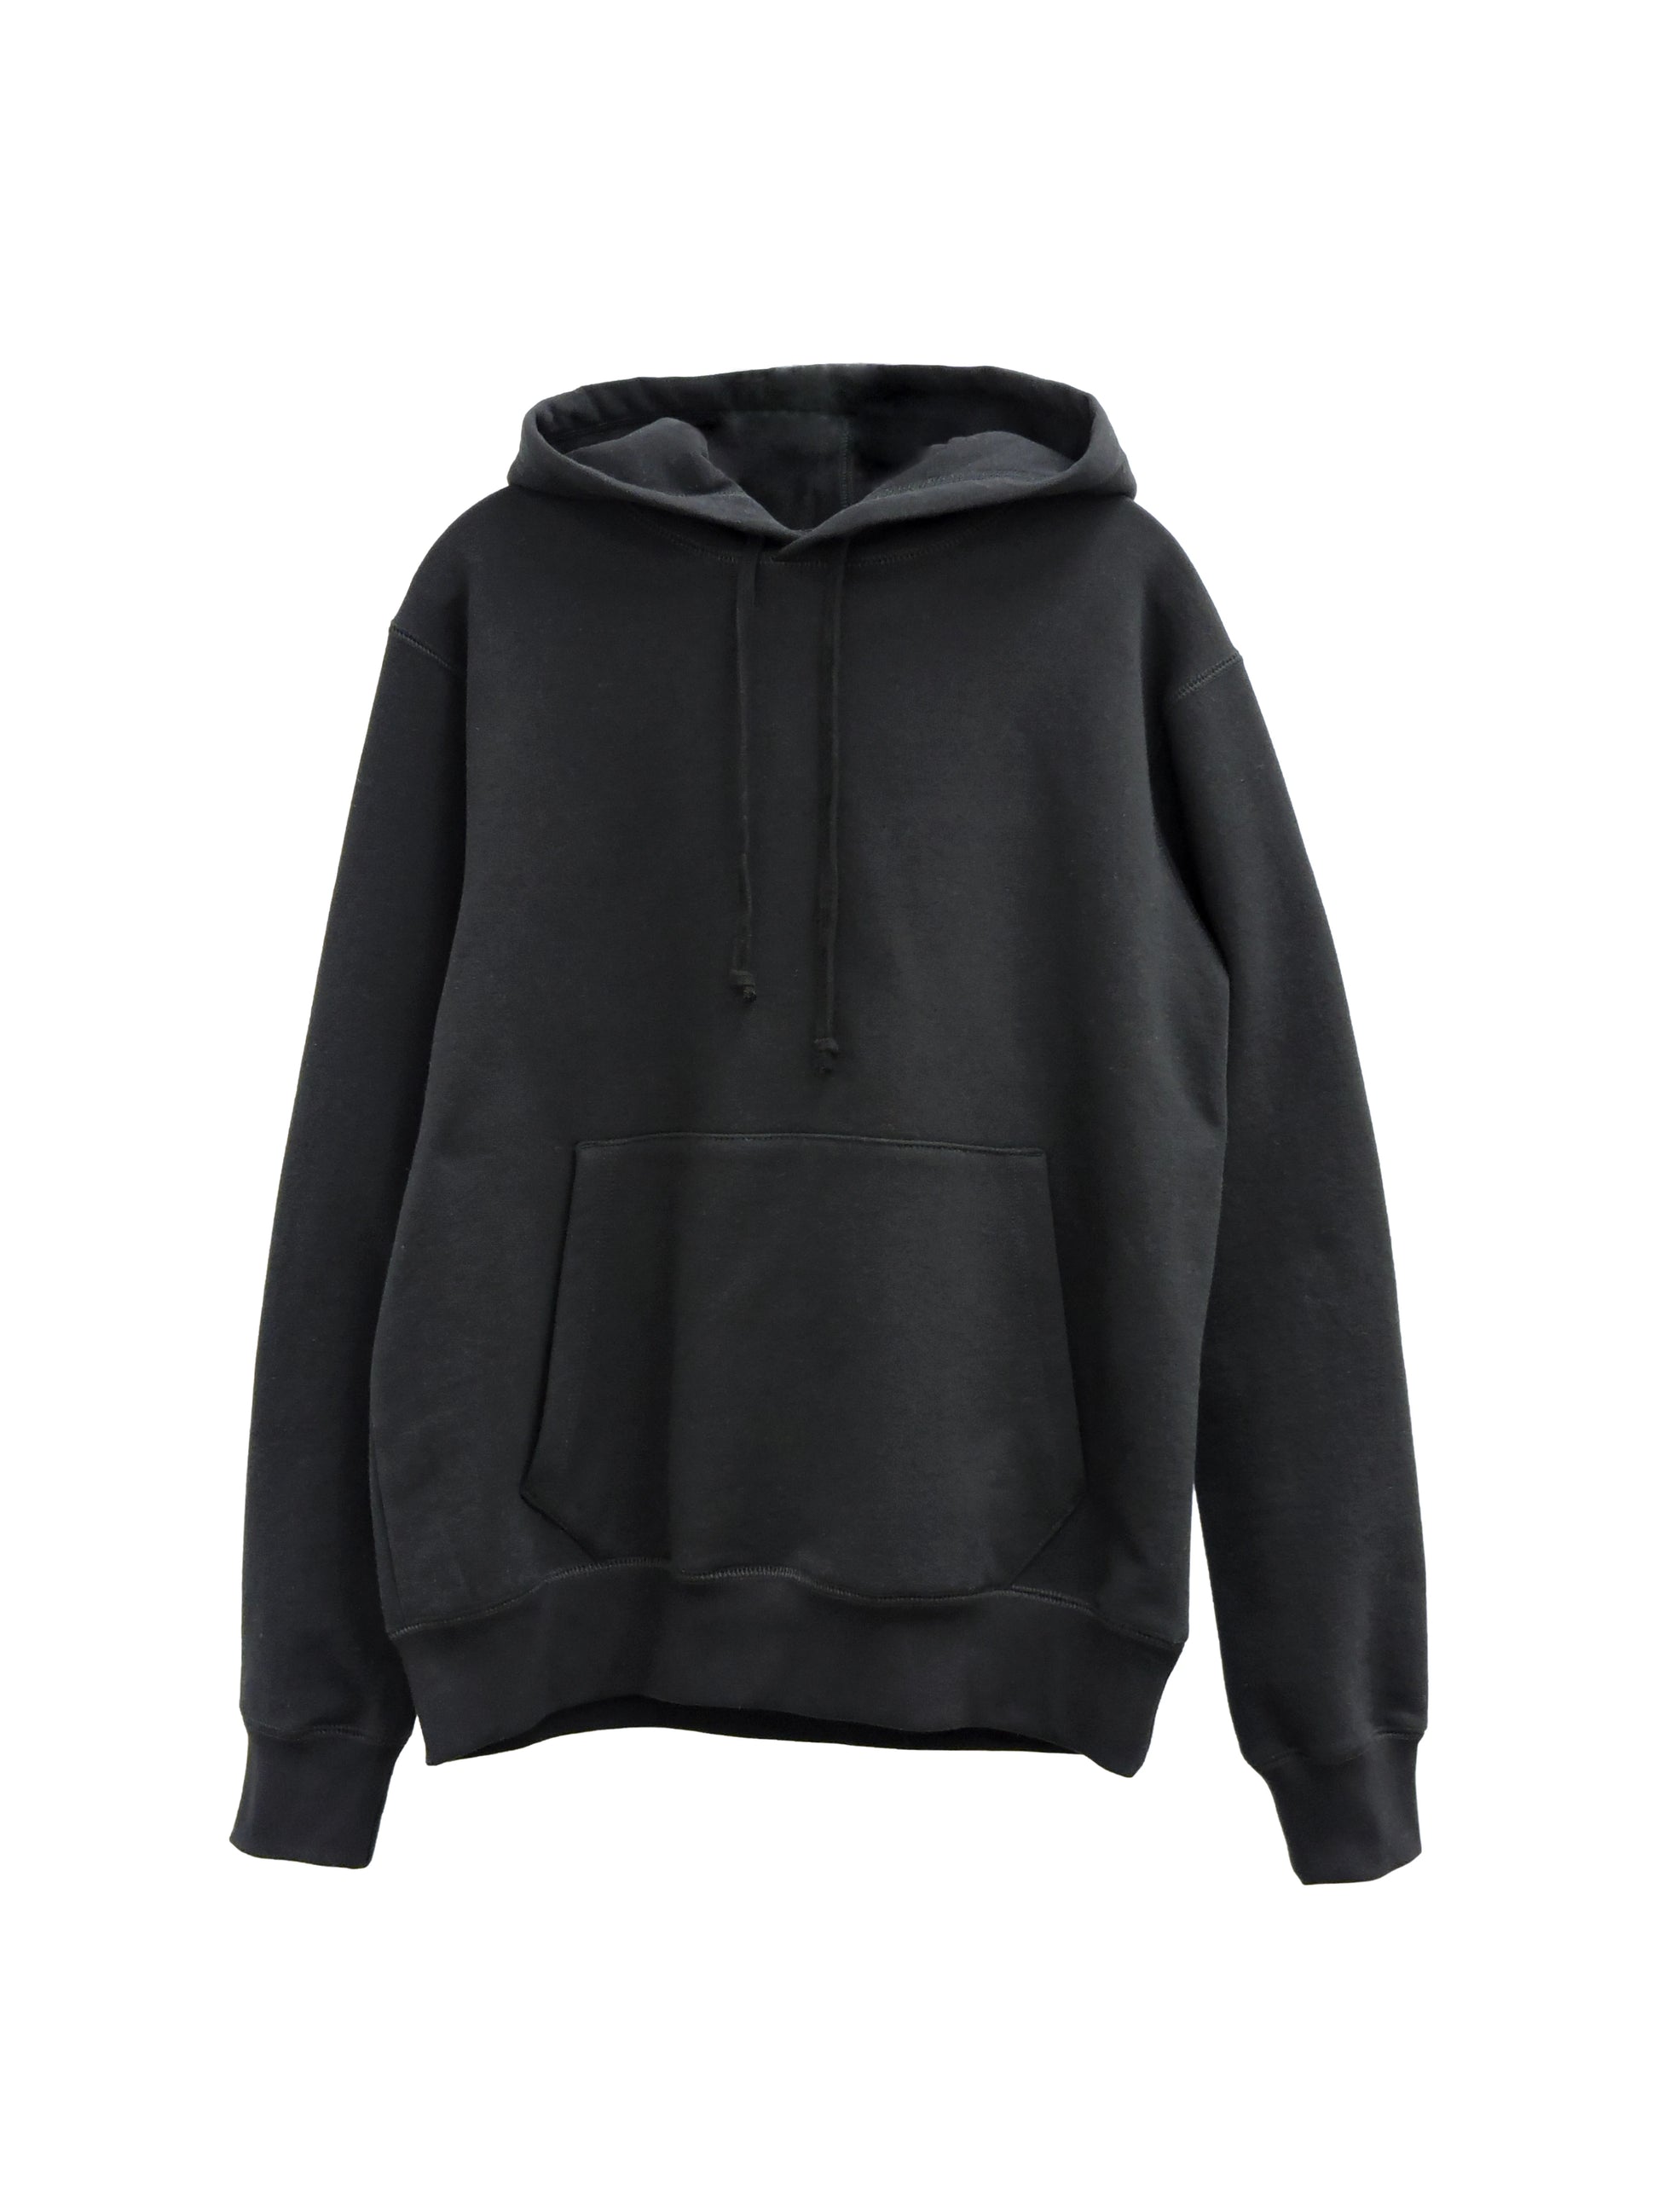 Bulk Black Comfort Colors Hoodies & Sweatshirts 